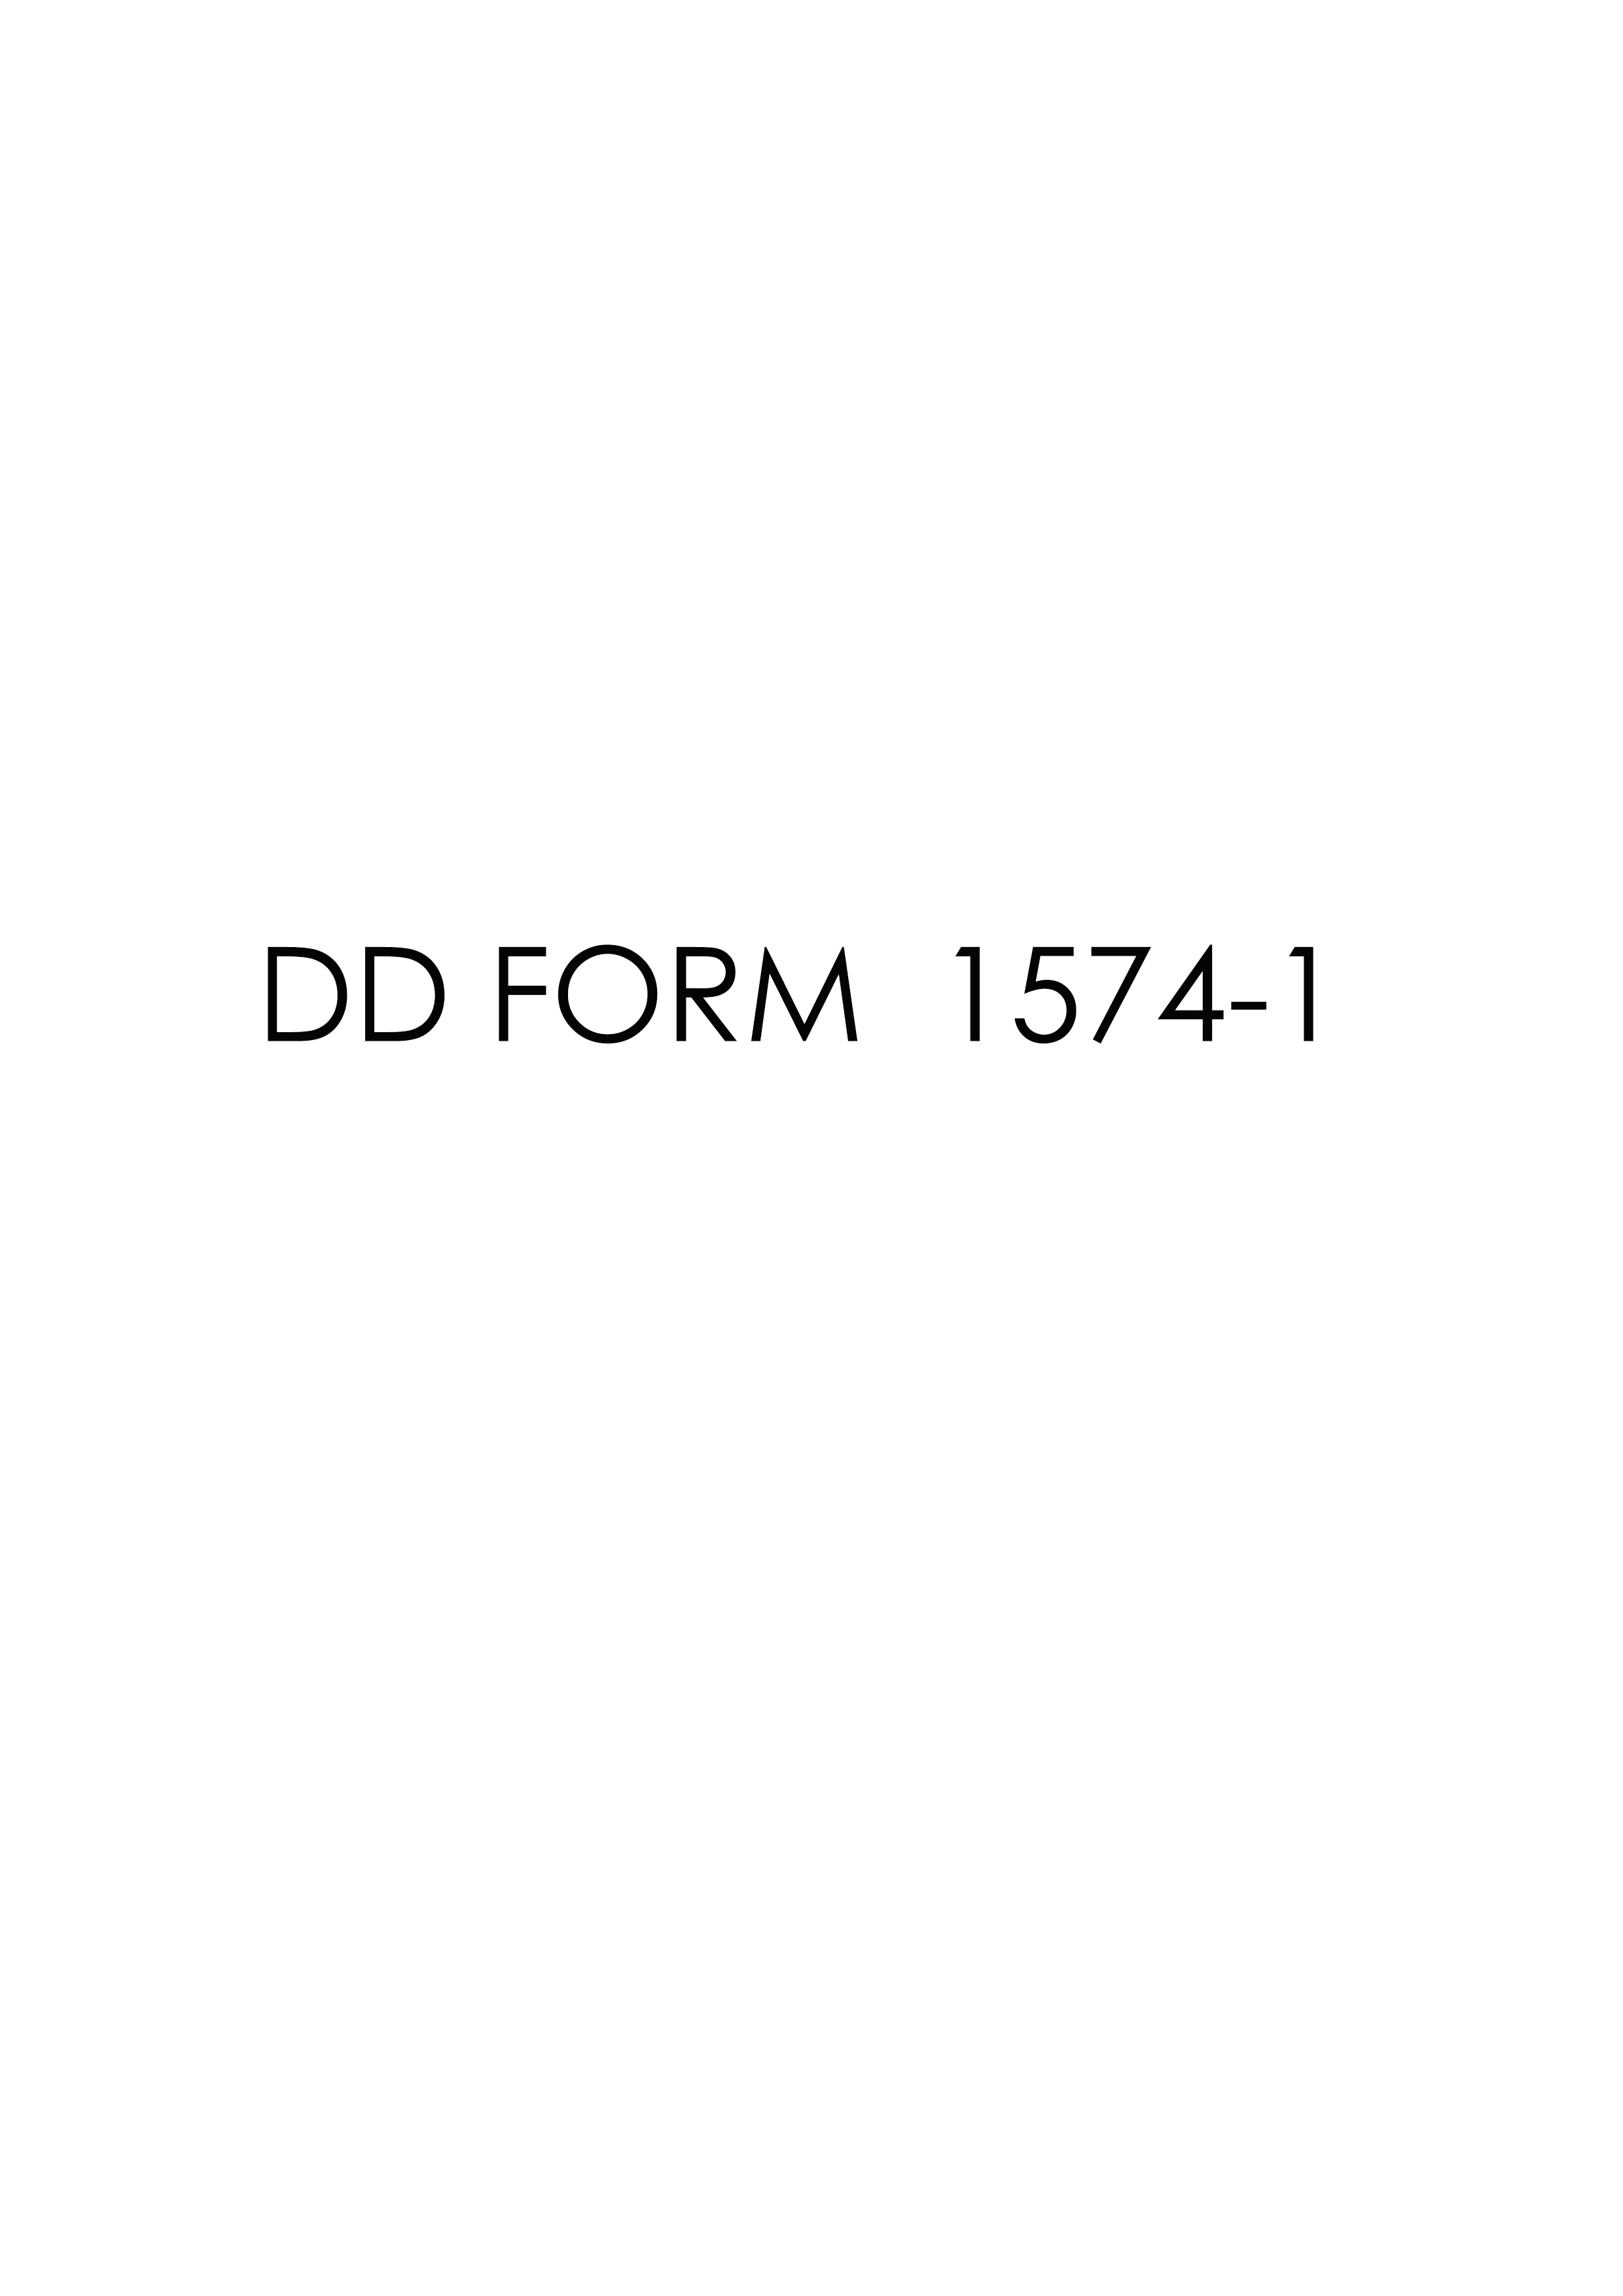 Download dd 1574-1 Form